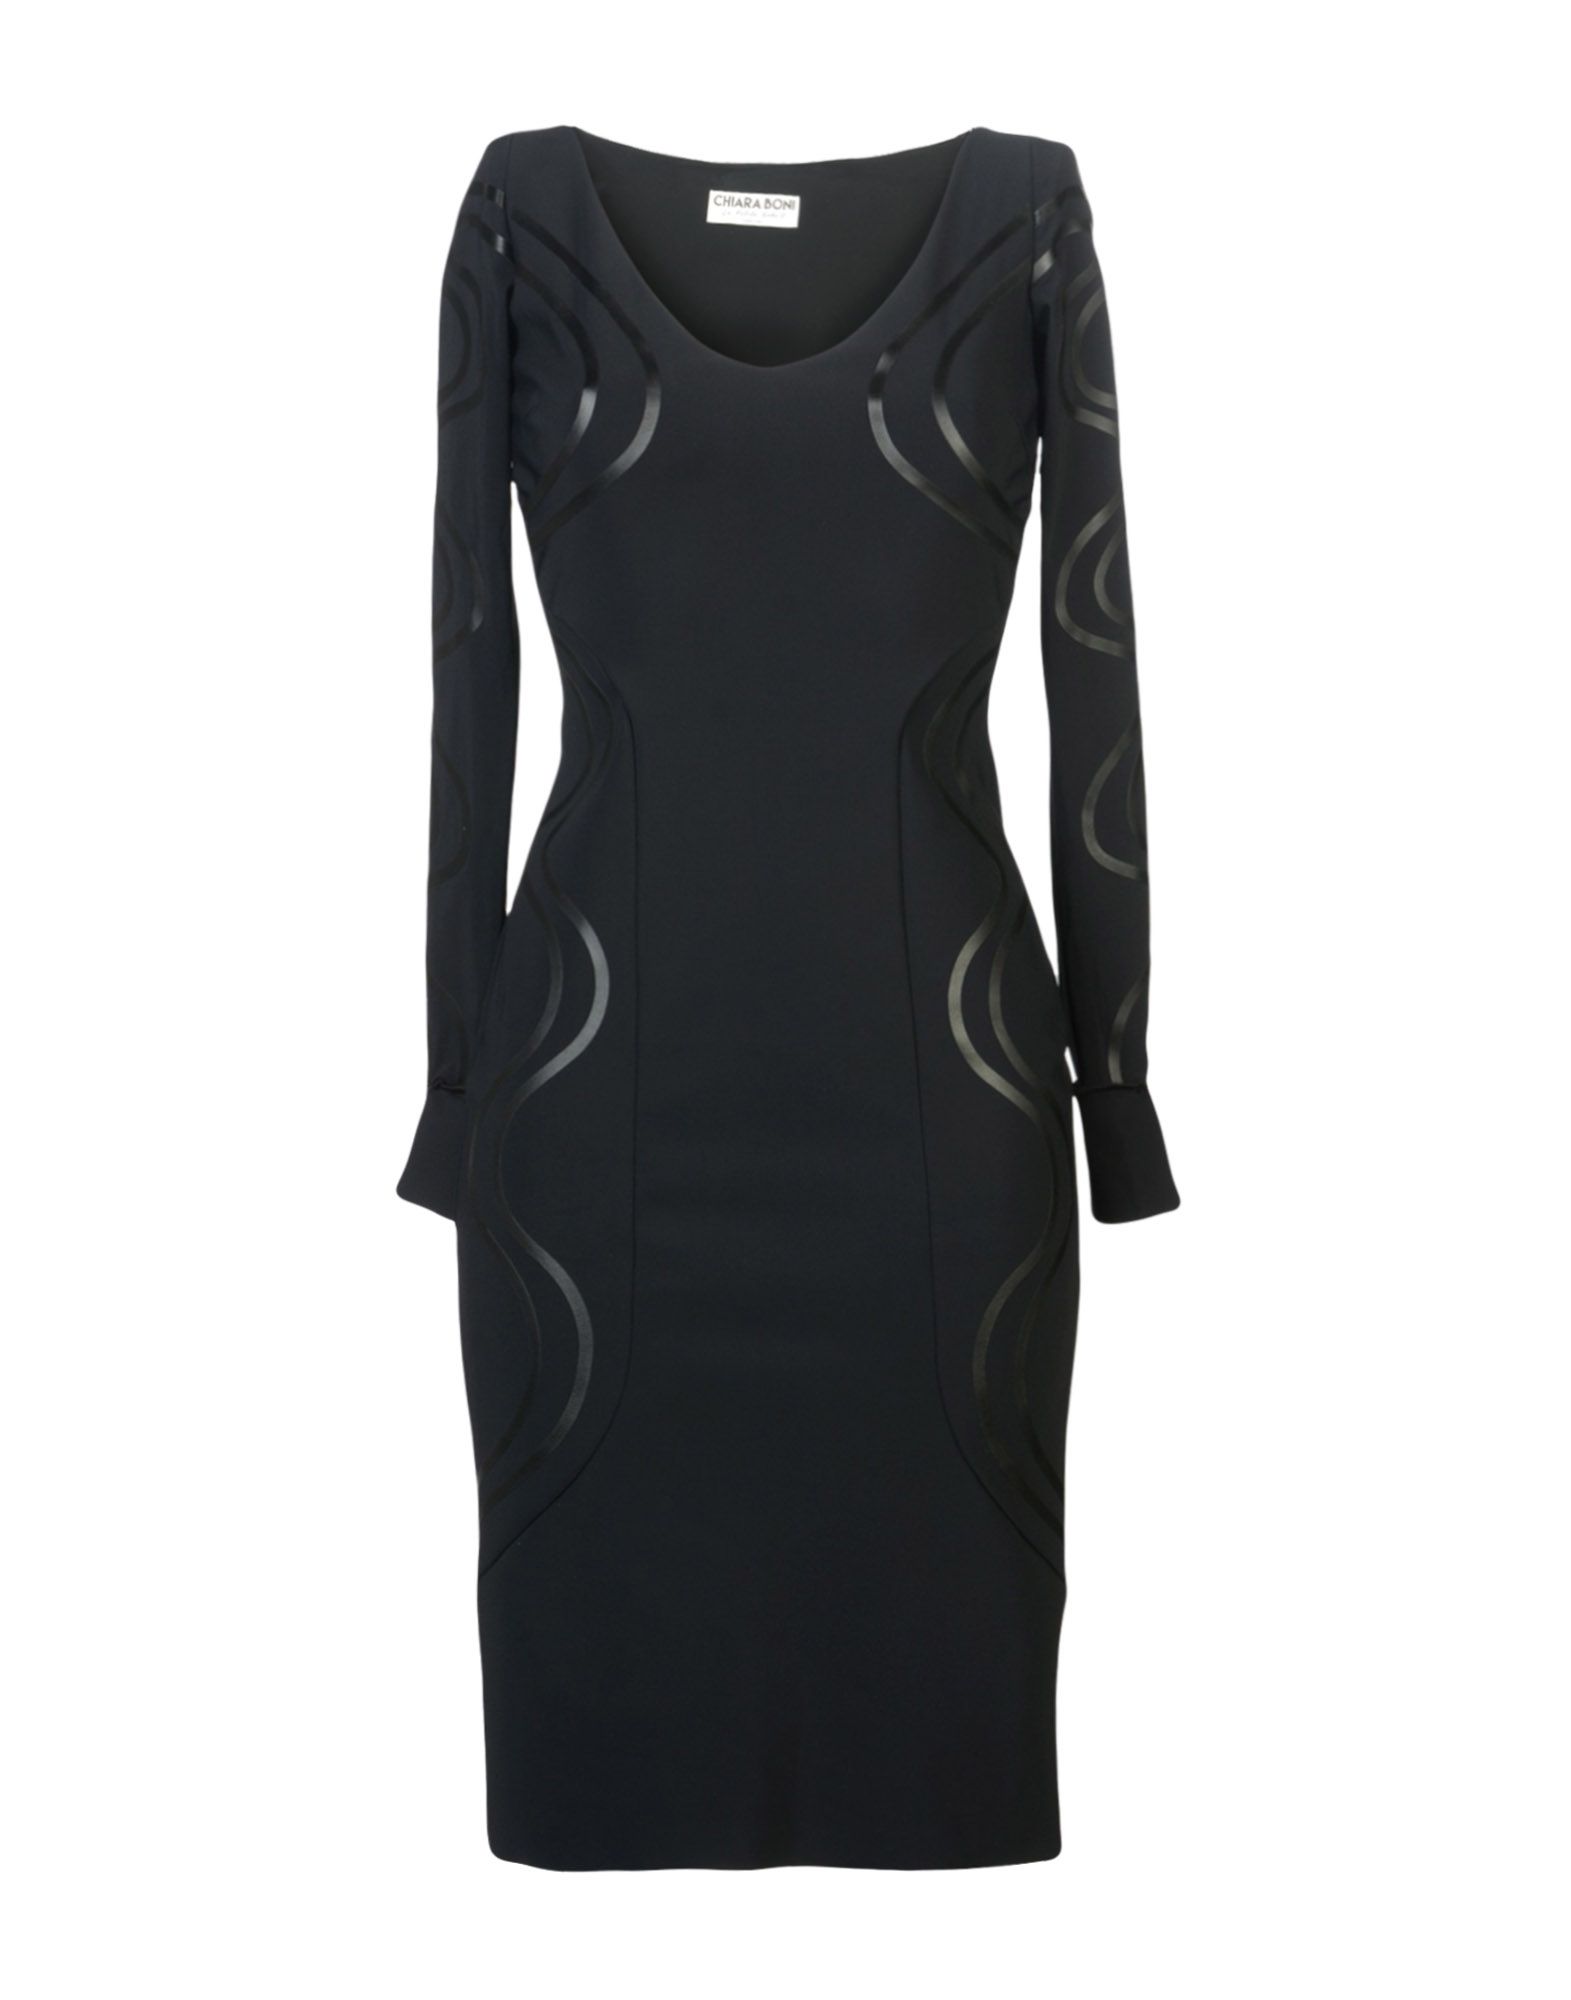 CHIARA BONI LA PETITE dressing gown Knee-length dress,34854625ND 3